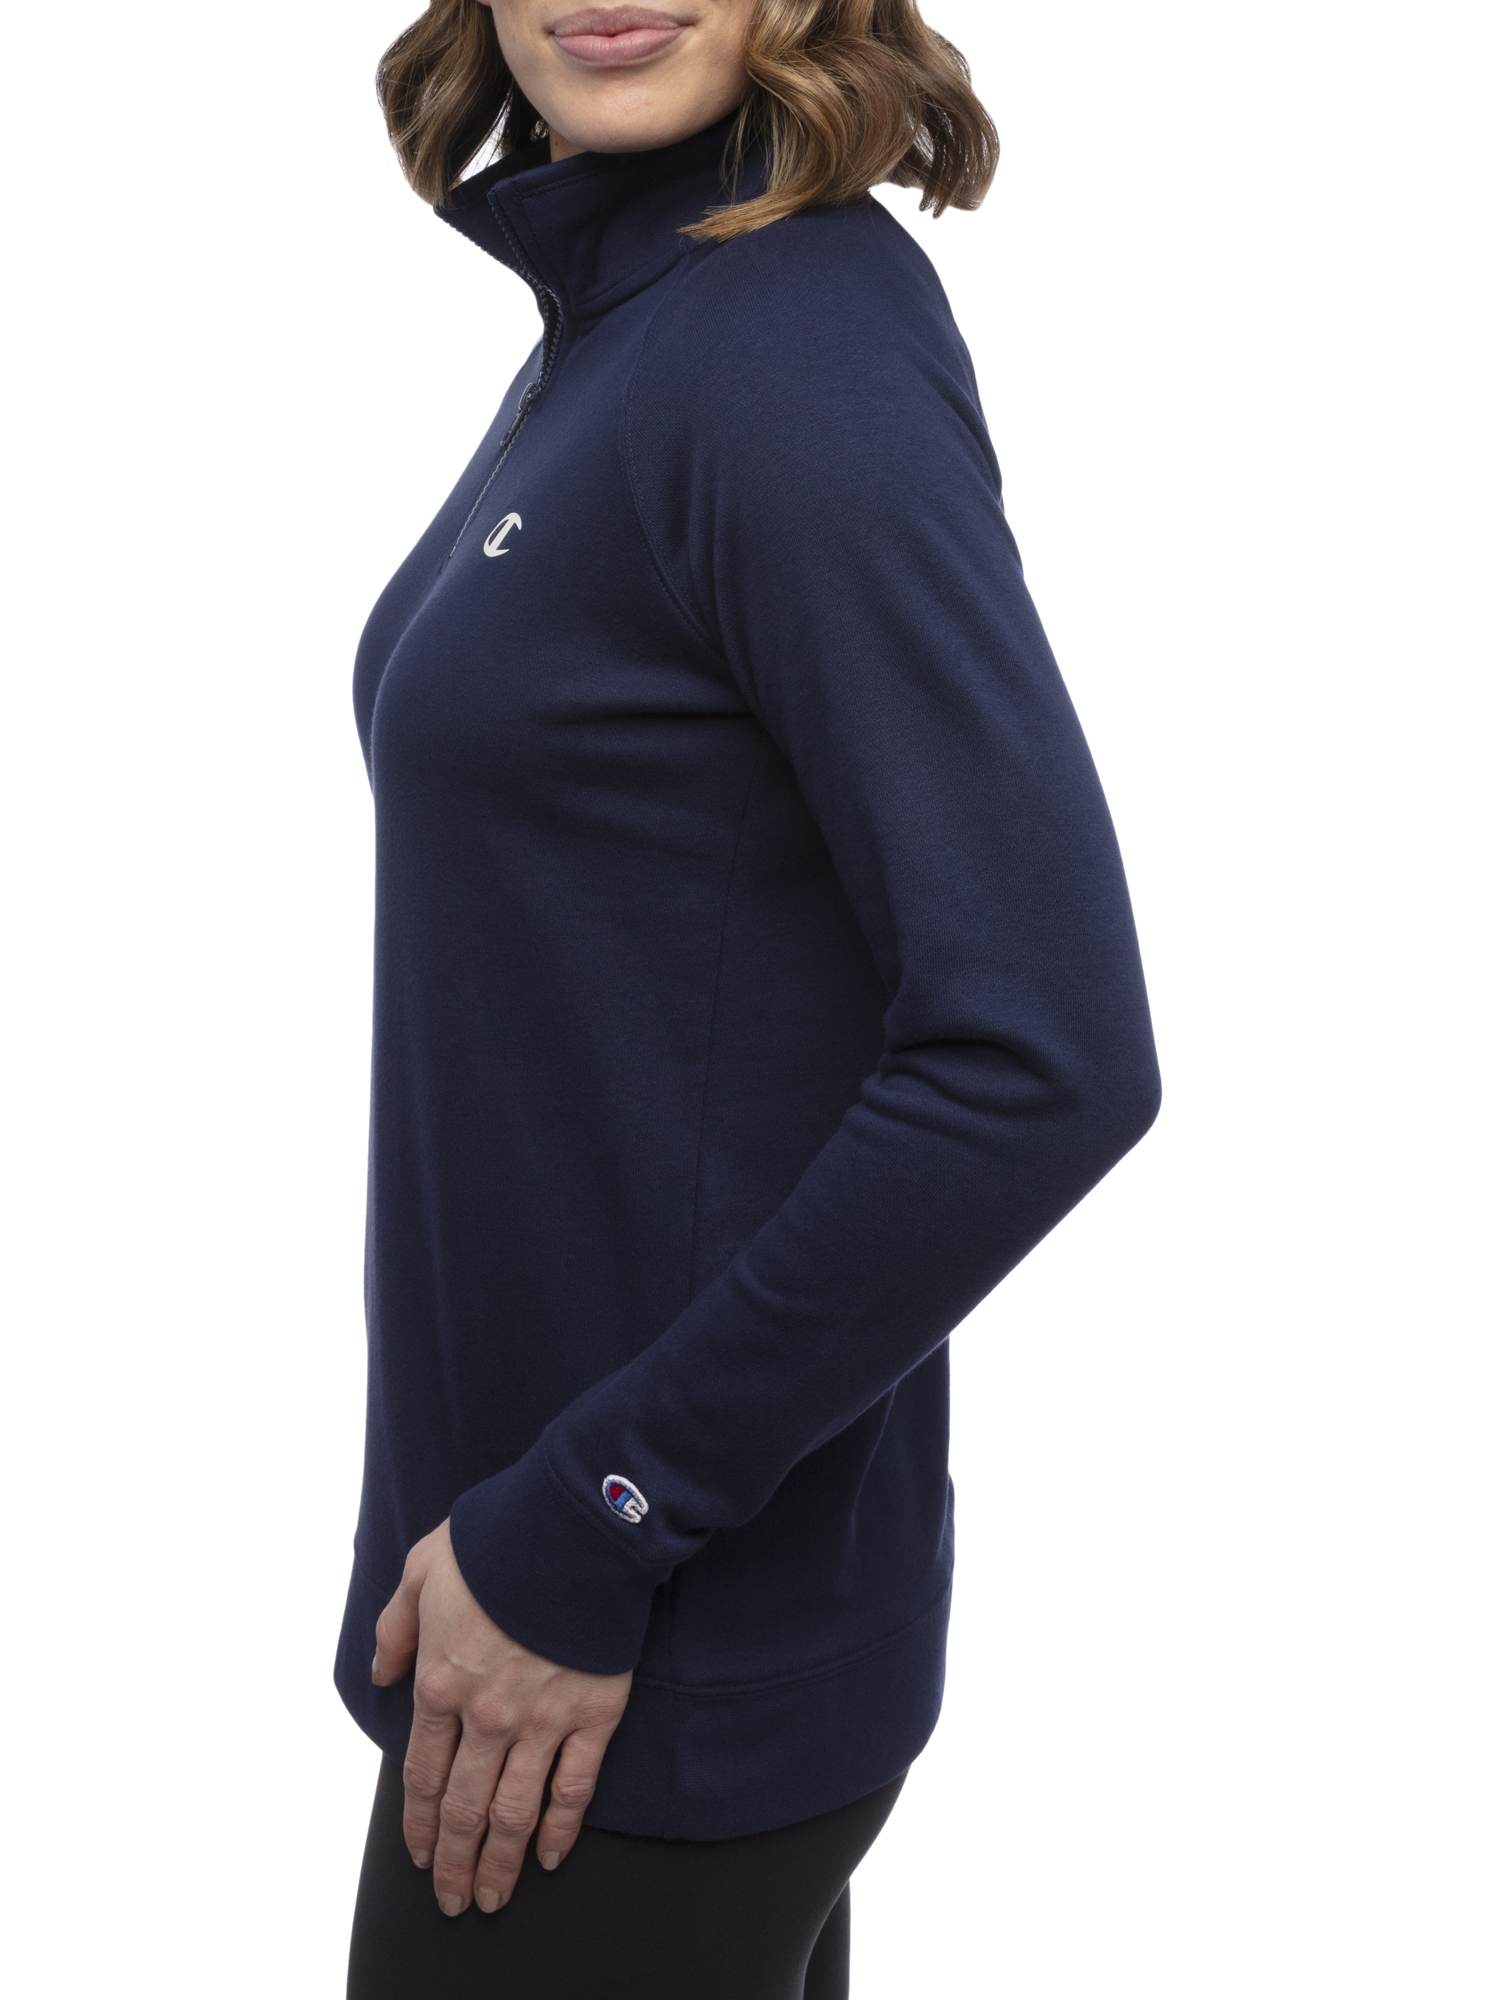 Champion Women's Long Sleeve Quarter Zip Pullover - image 2 of 6